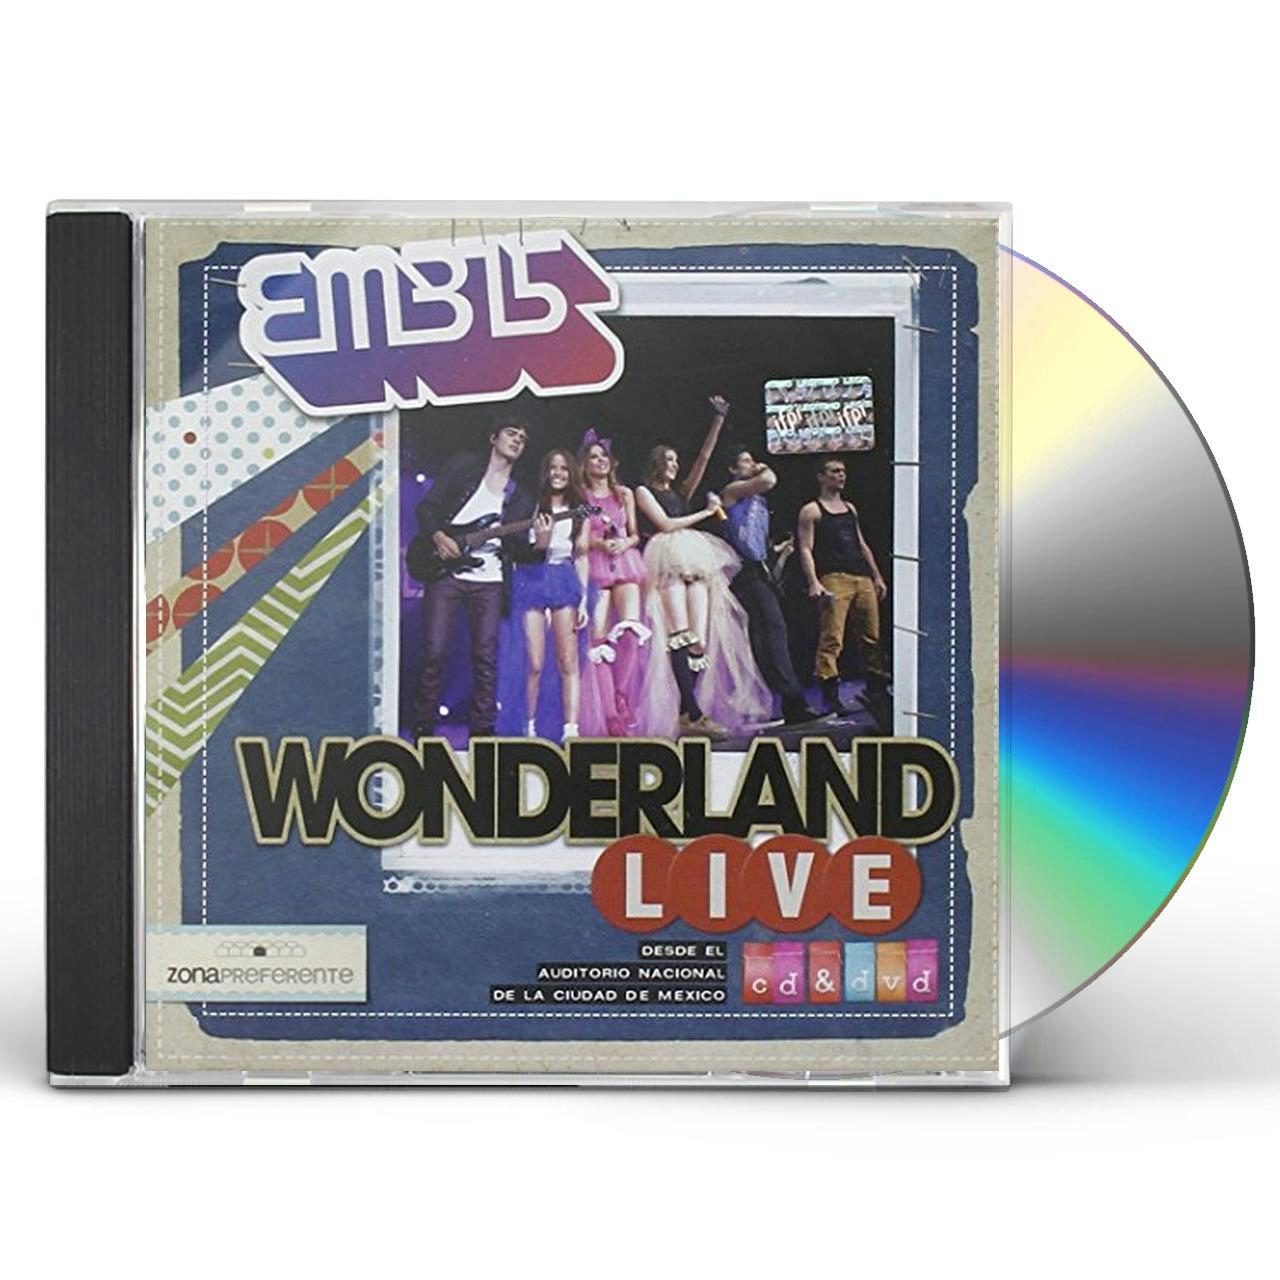 EME-15 WONDERLAND LIVE CD